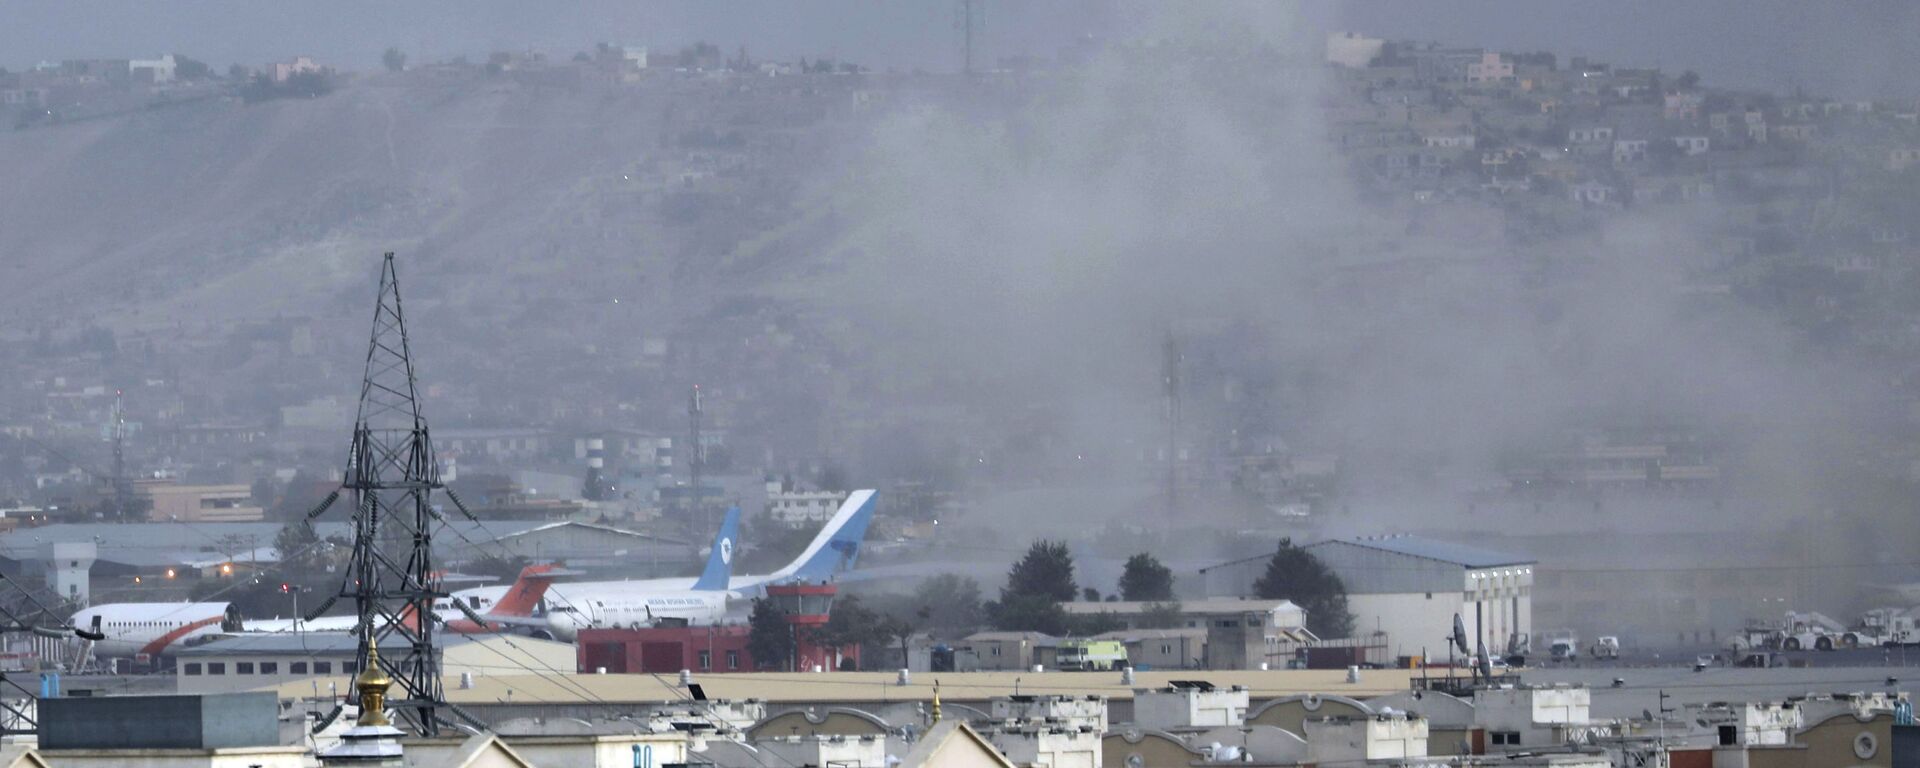 Smoke rises from a deadly explosion outside the airport in Kabul, Afghanistan on Thursday 26 August 2021. 
Дым от взрыва возле аэропорта в Кабуле, Афганистан - Sputnik International, 1920, 27.08.2021